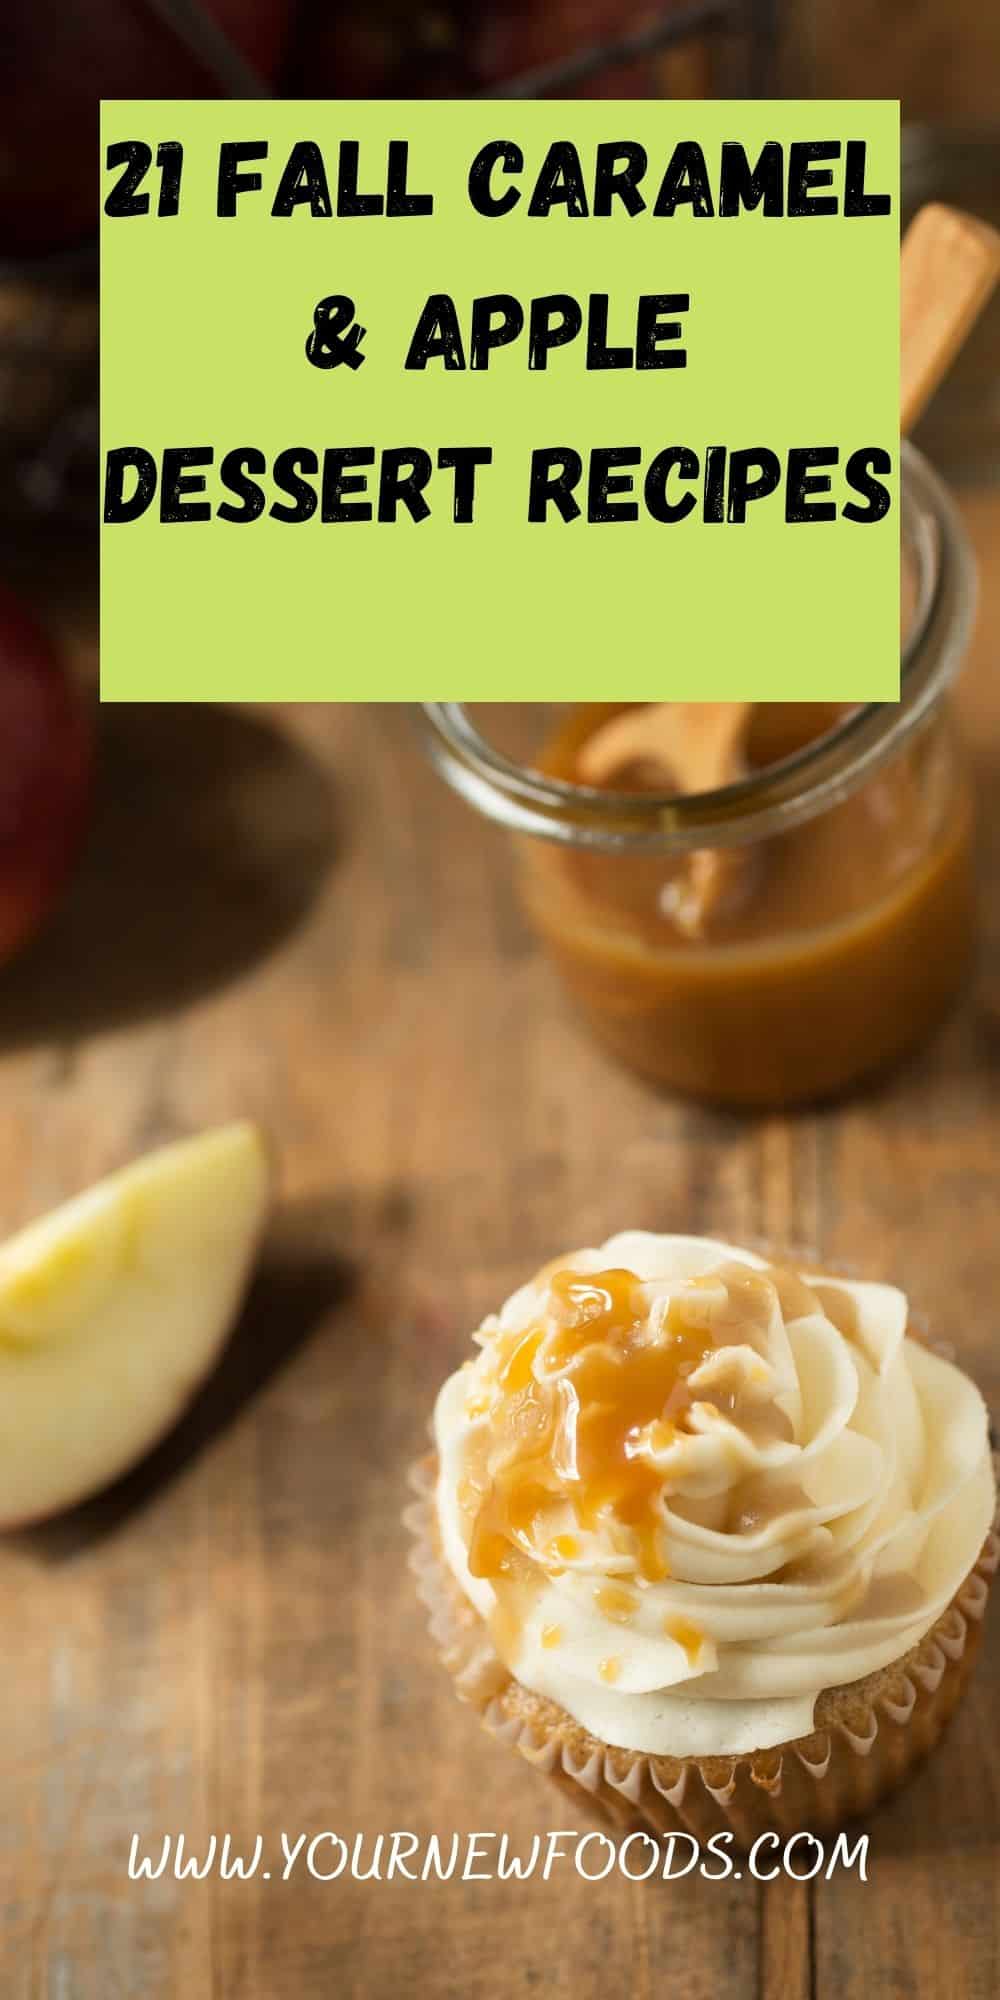 21 Caramel & Apple Dessert Recipes